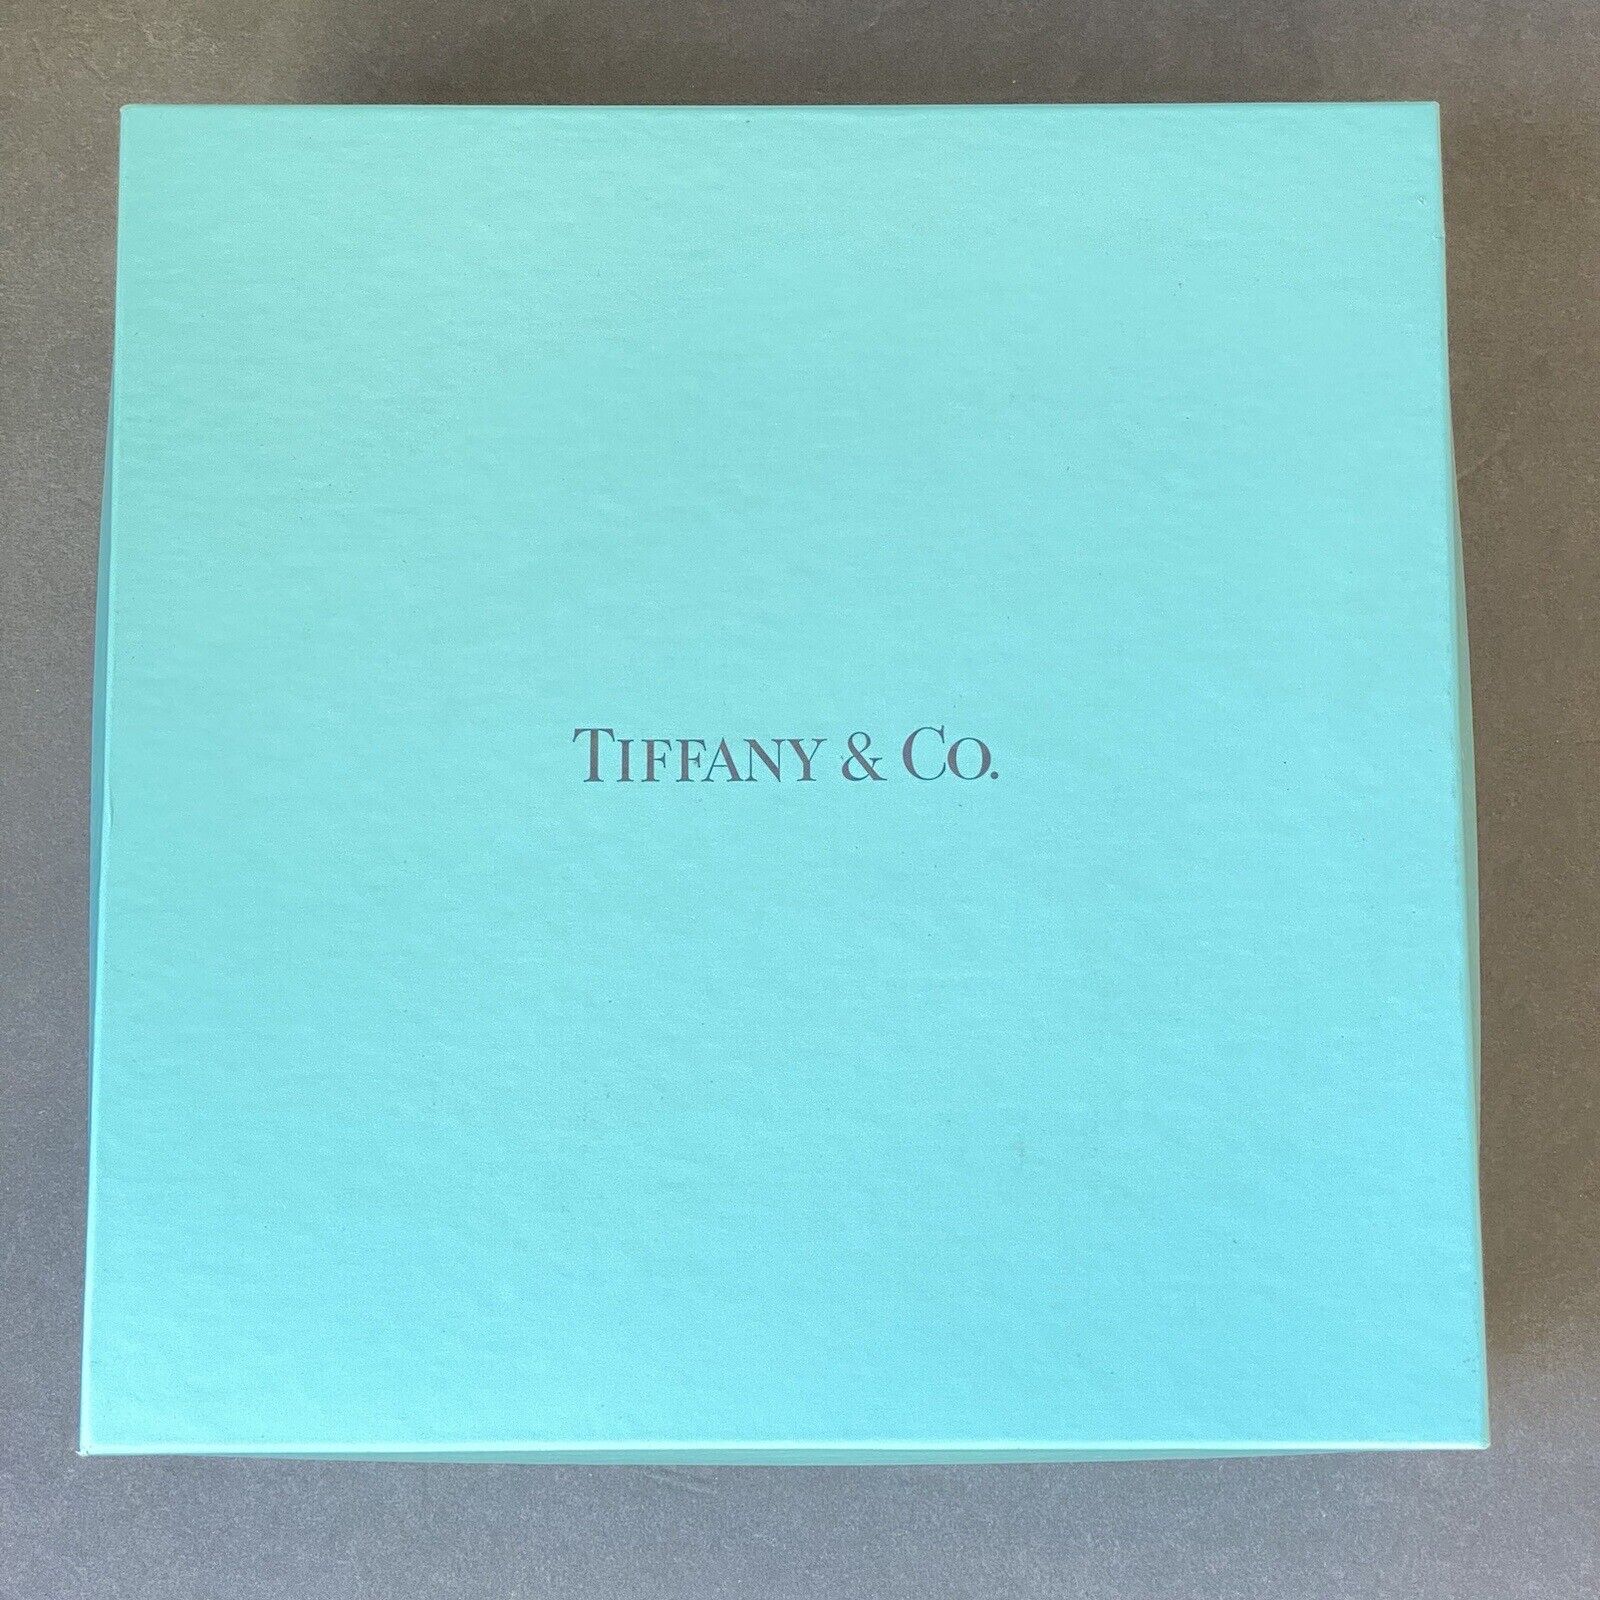 Authentic Tiffany & Co. XL Blue Gift Box Empty 13”x13”x4” Organize and Storage